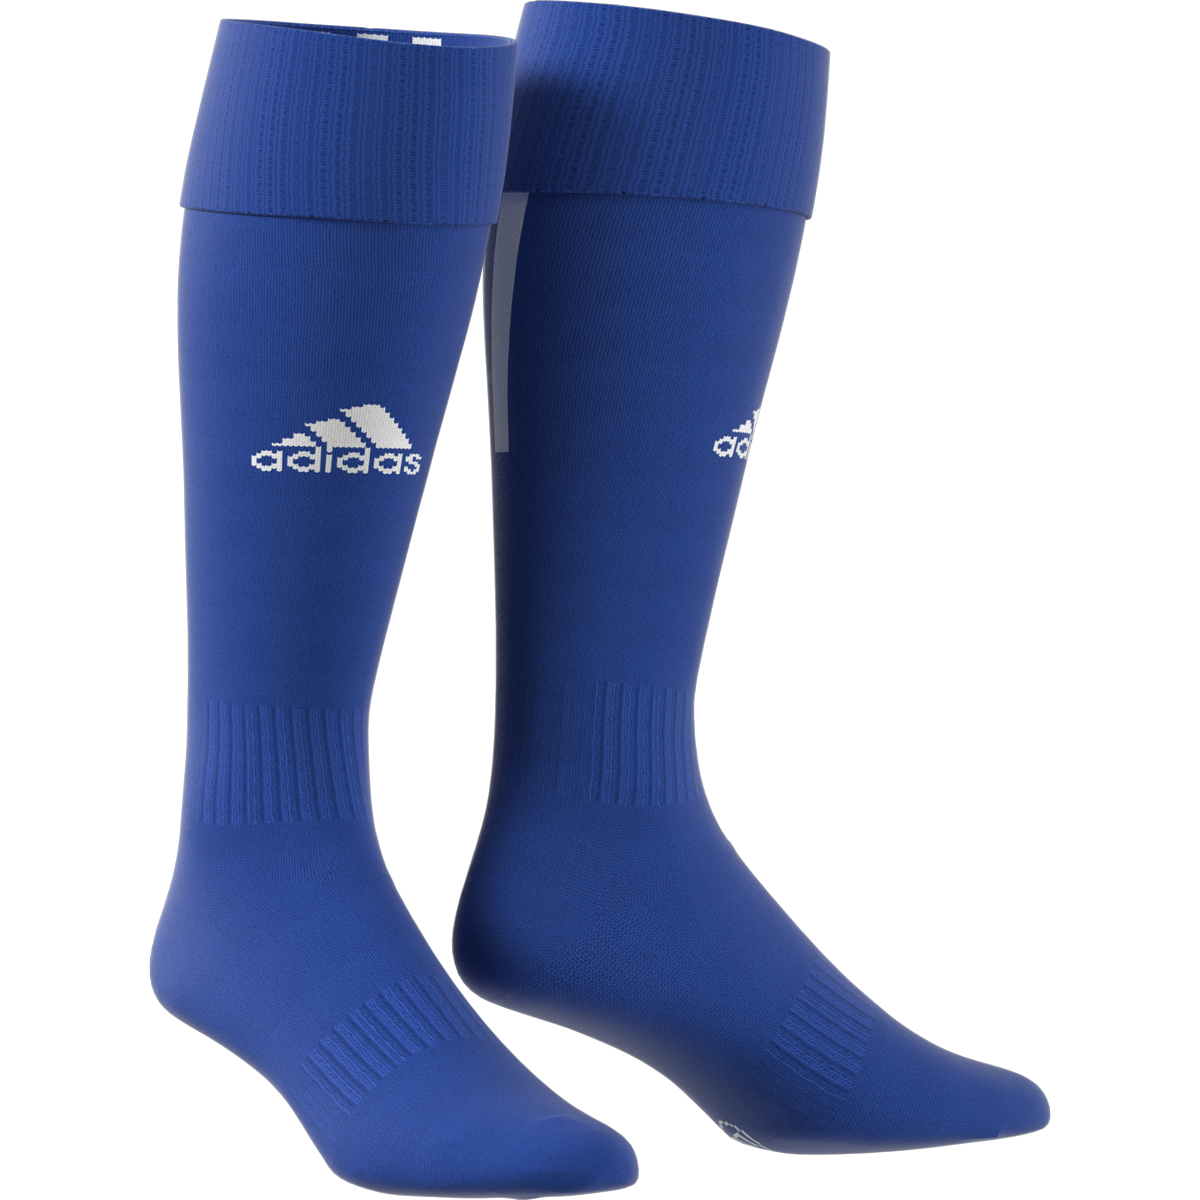 Adidas Santos 18 modrá/bílá EU 46/48